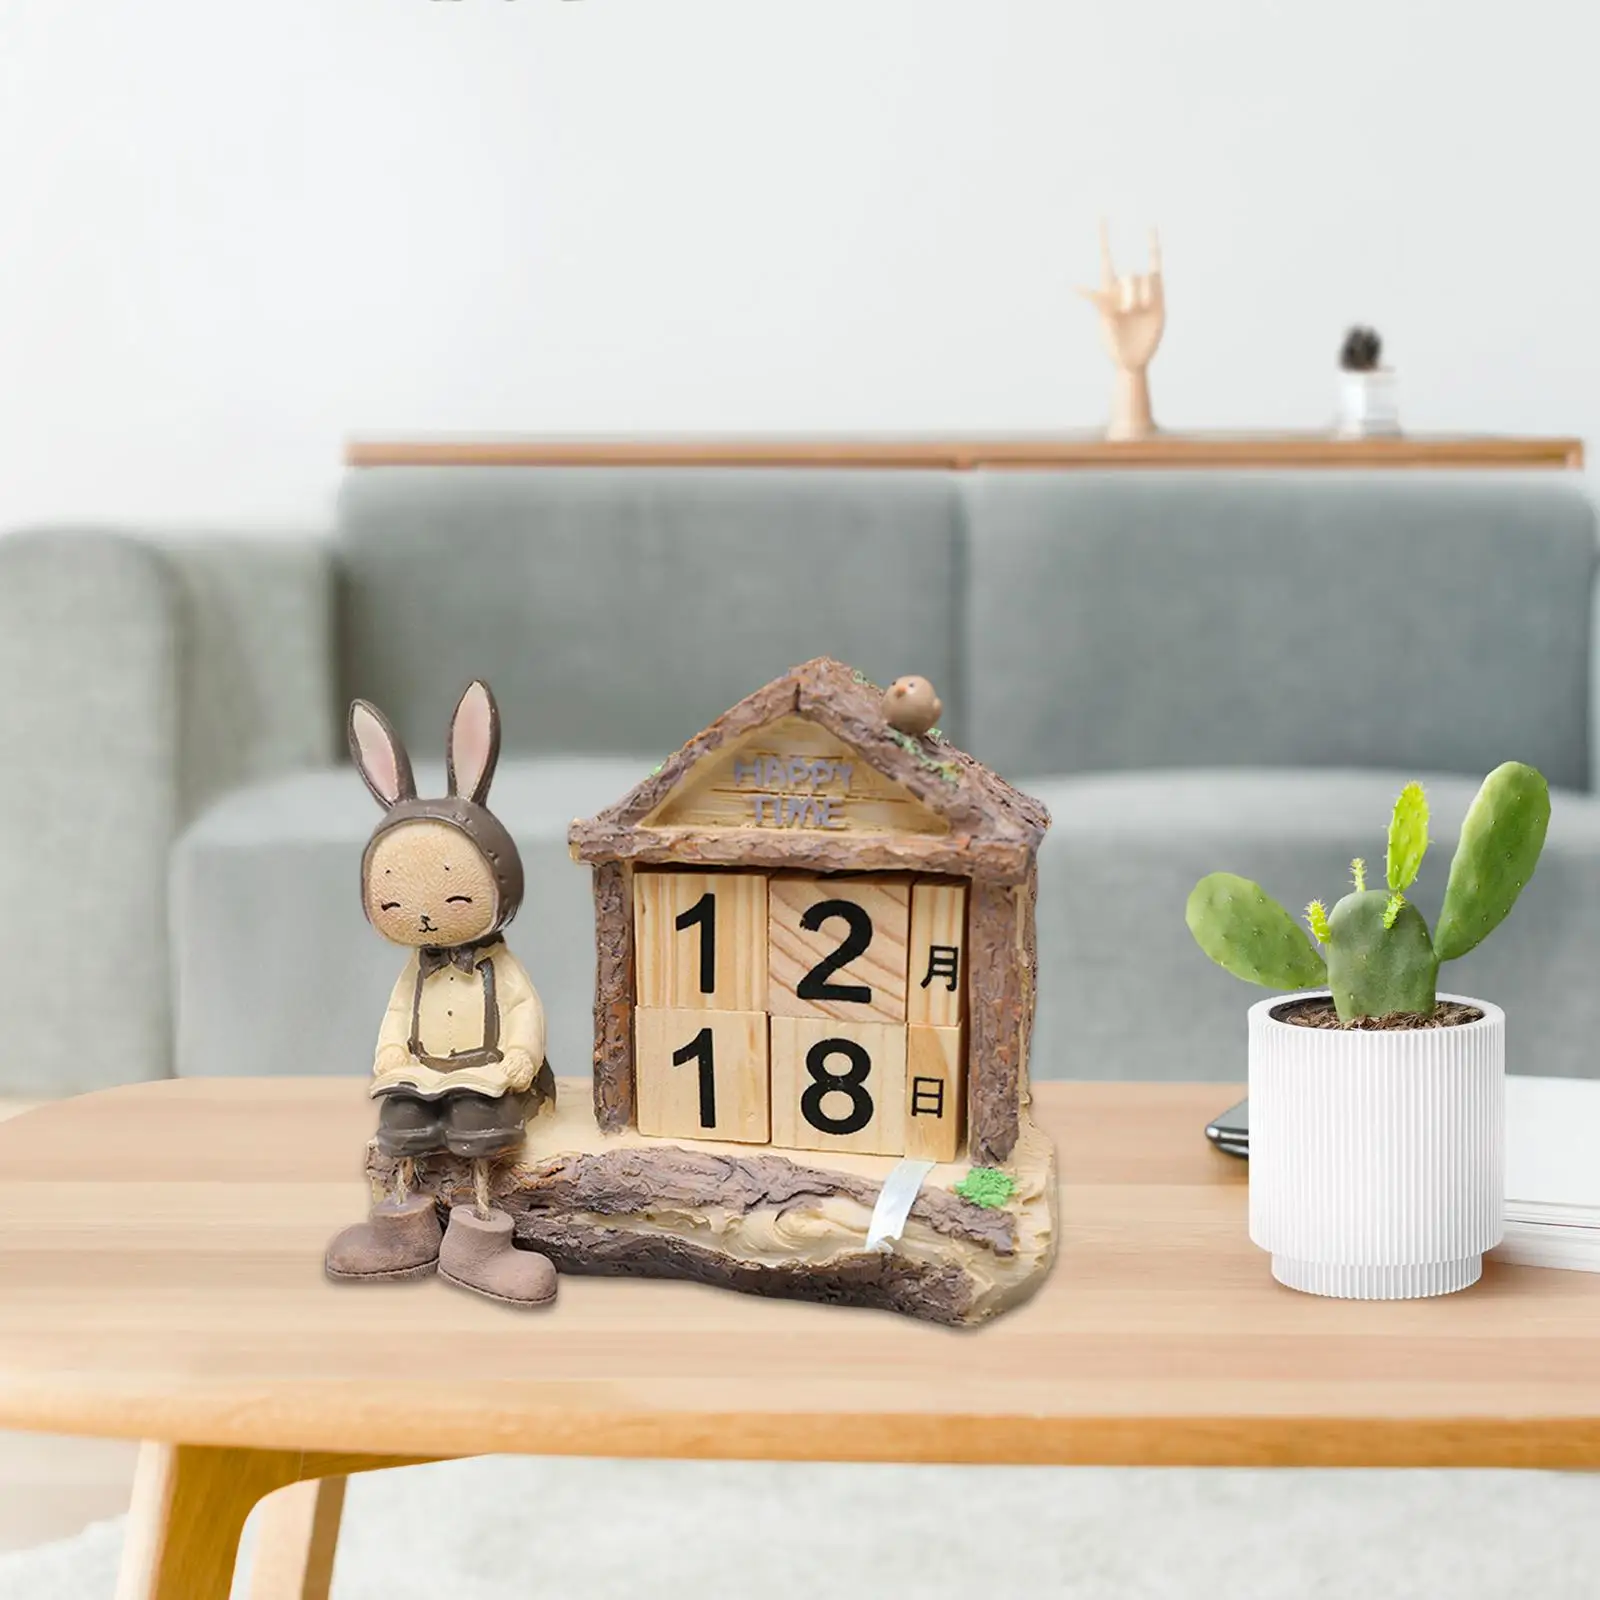 Desk Calendar Blocks Rustic Tabletop Calendar Wooden Block Daily Calendar Month Date Display for Office Indoor Living Room Decor